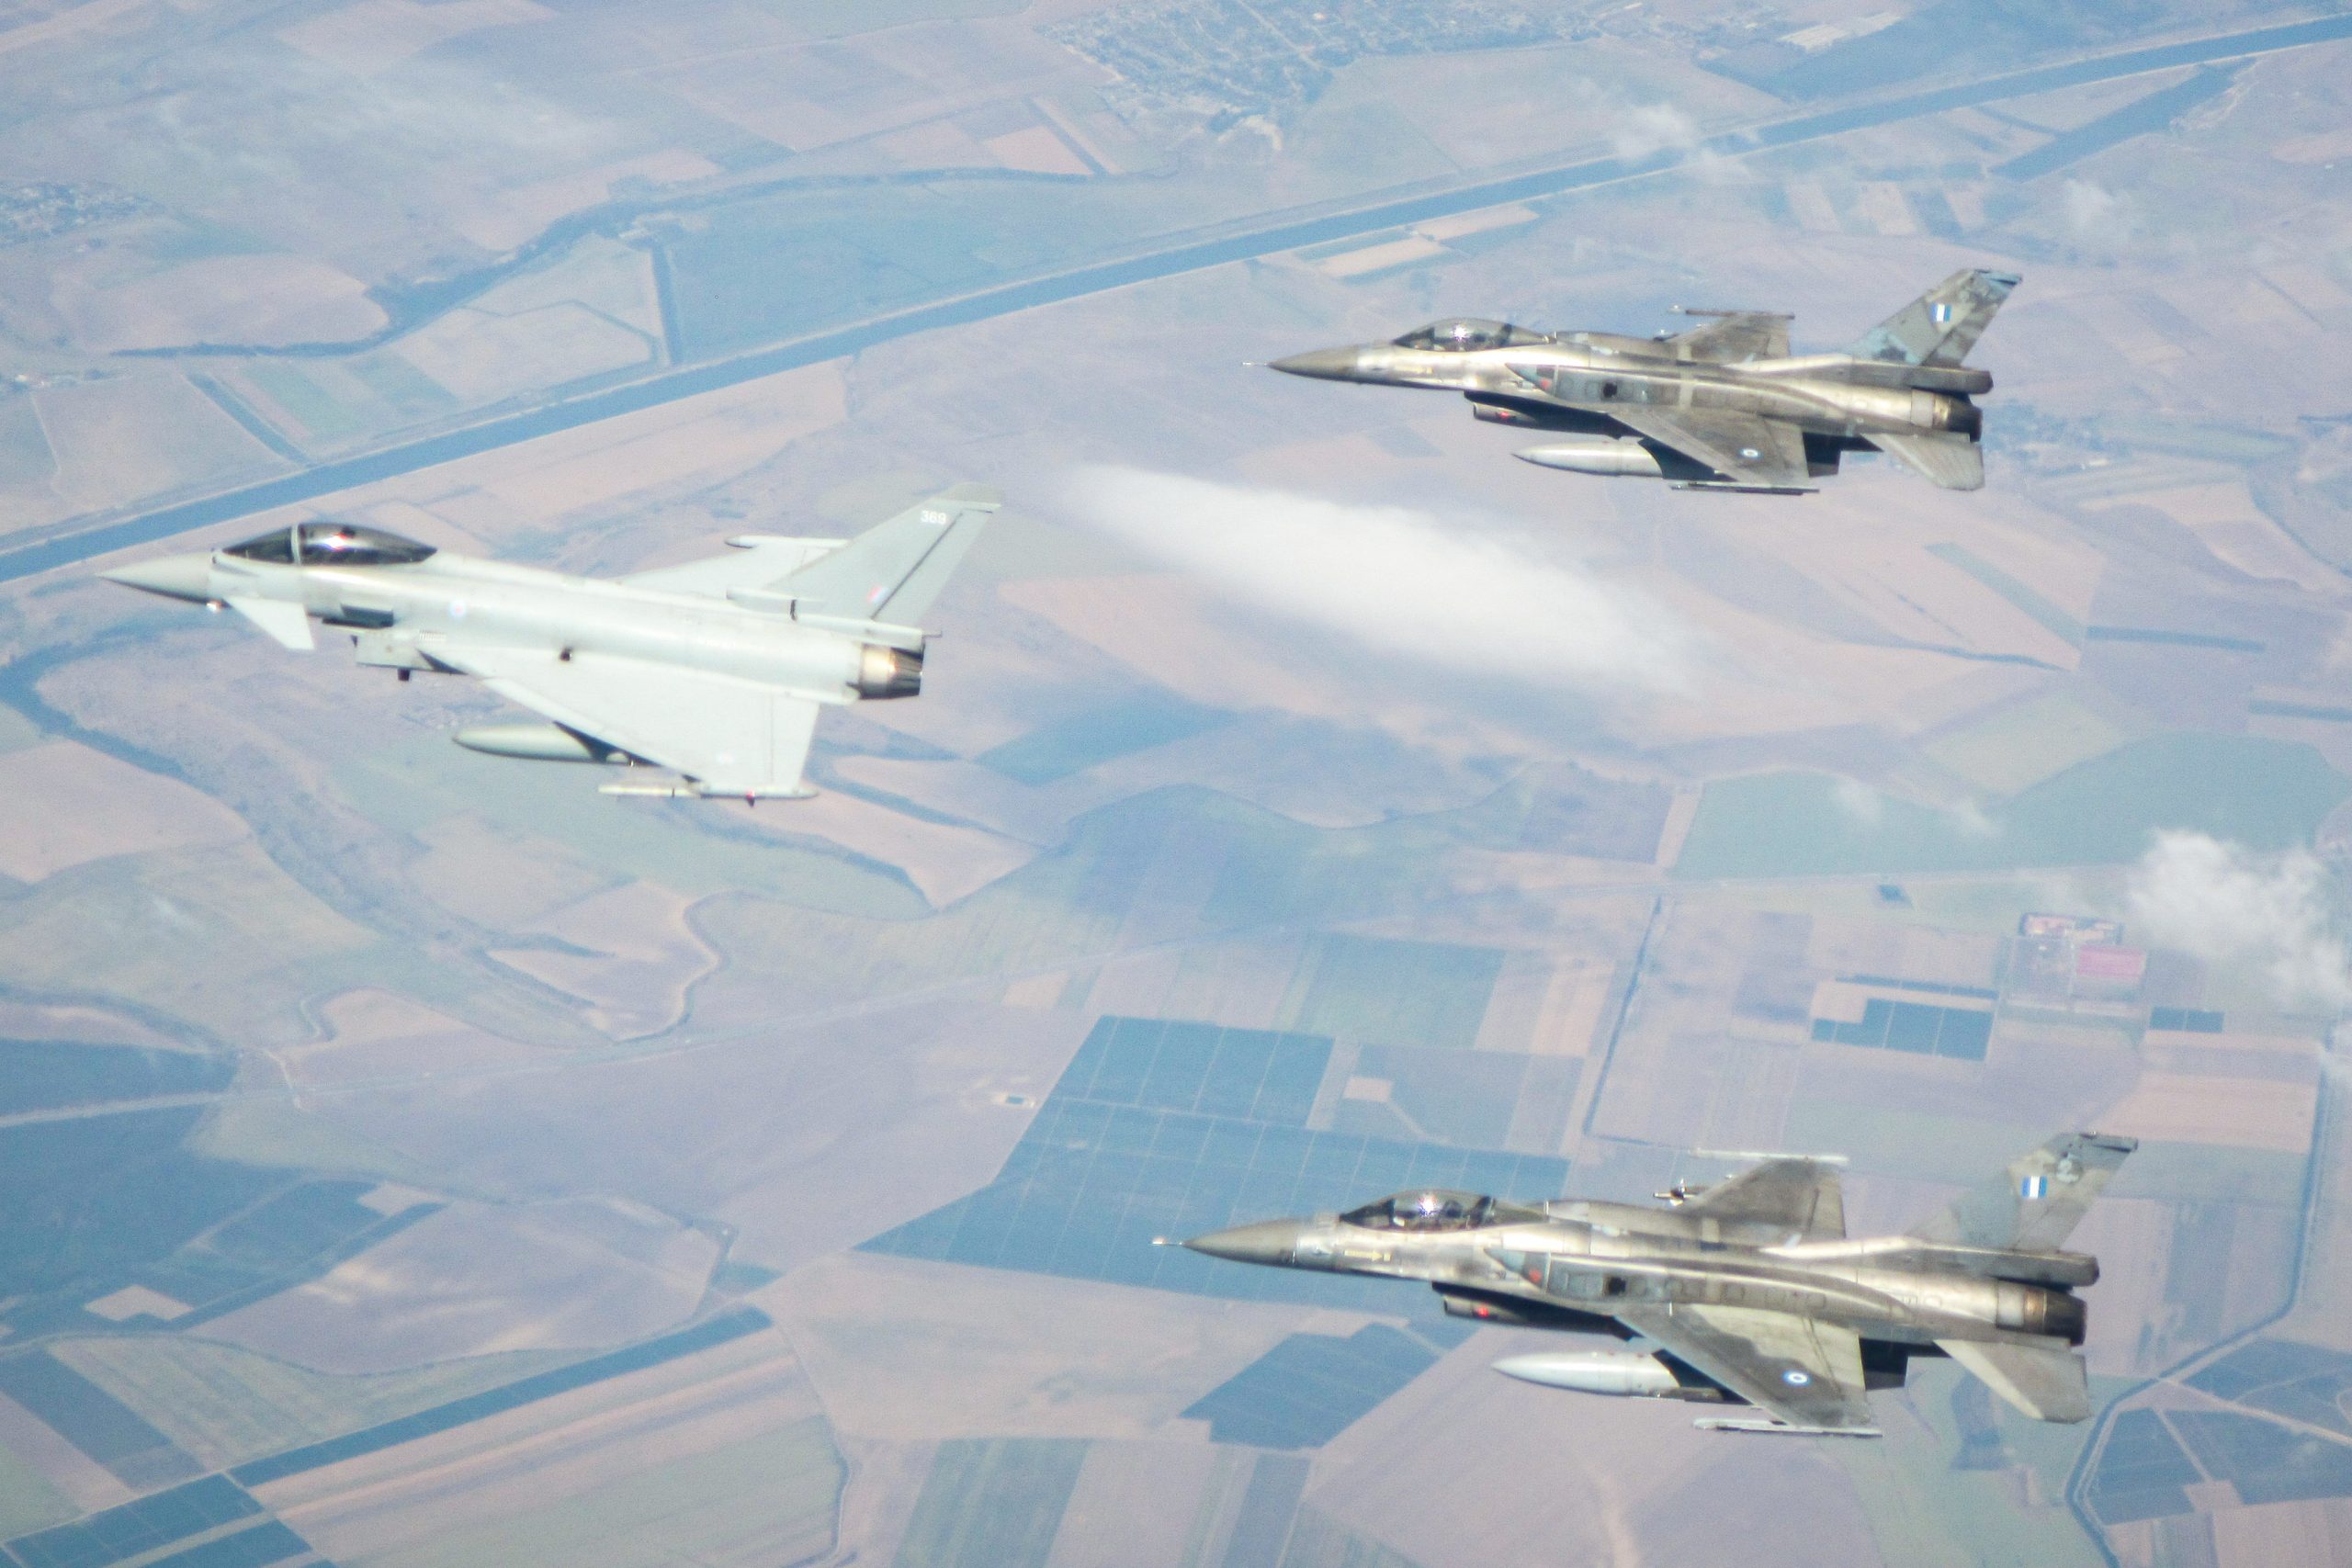 When British Fighter Jets Go “Against” Greek Fighters